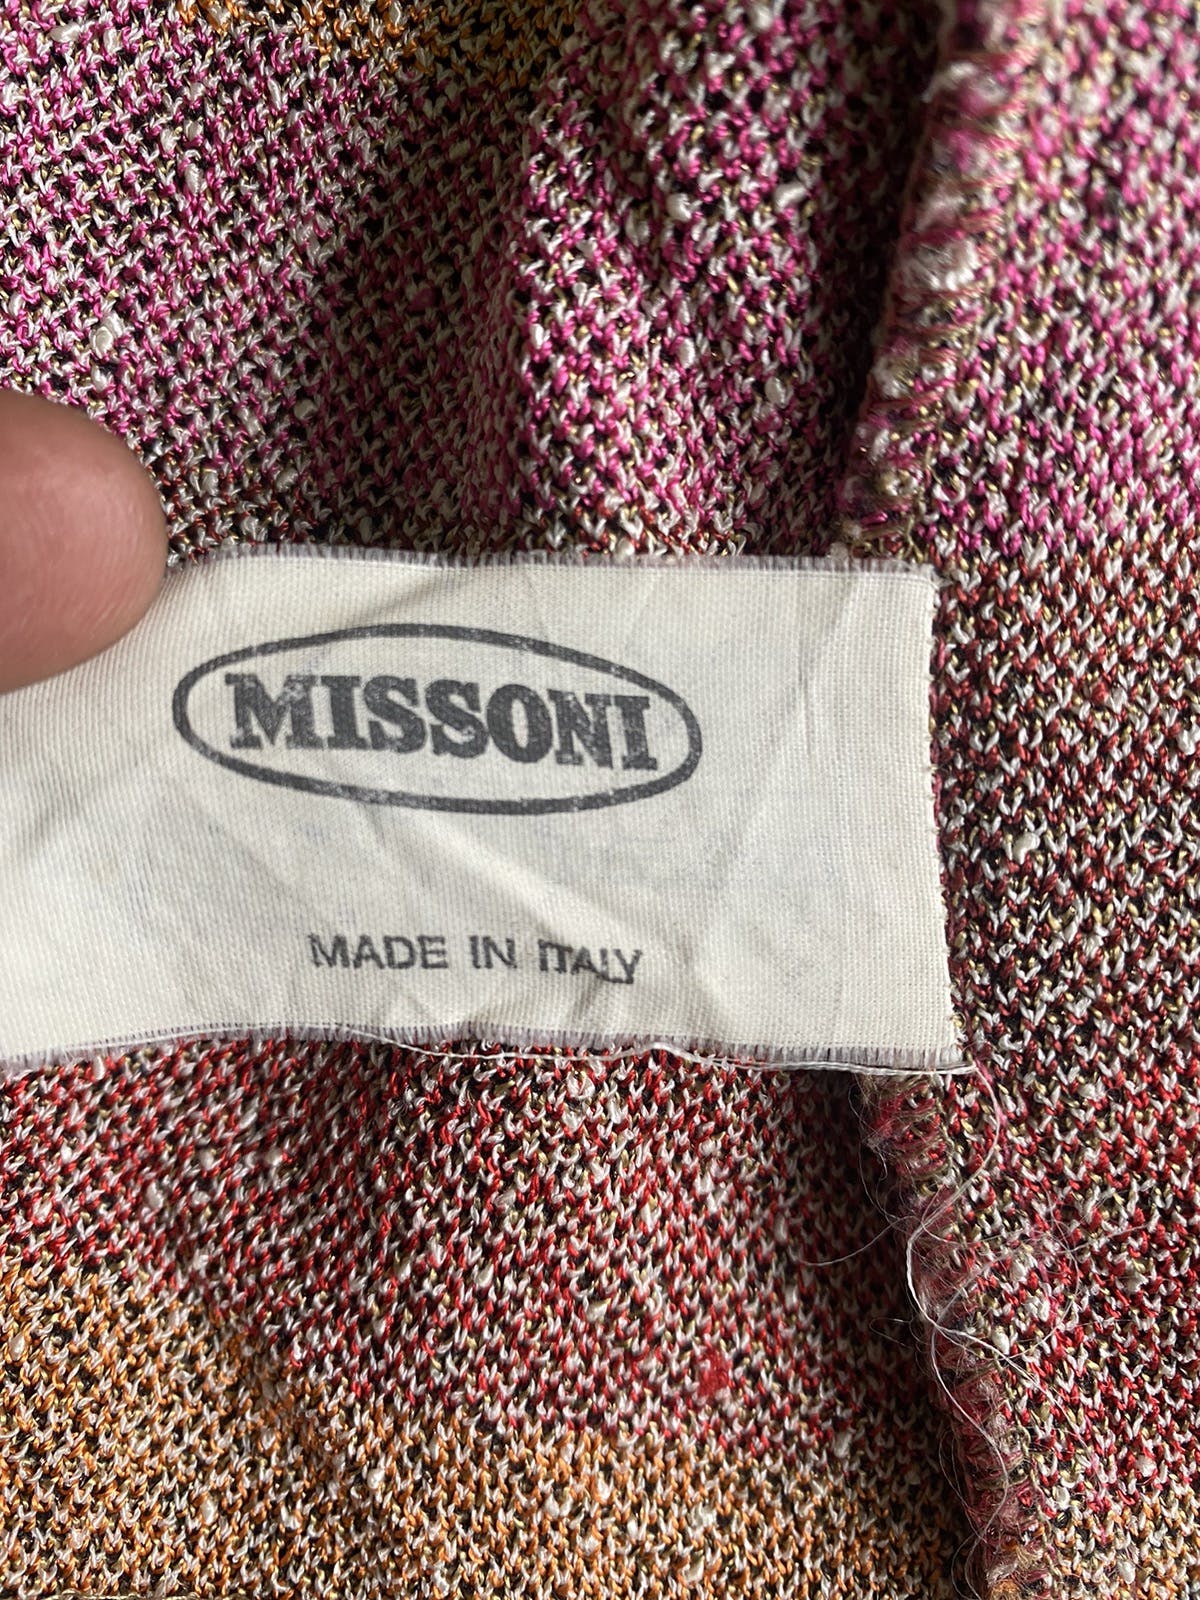 Vintage Missoni fringe knitted Jacket - 8